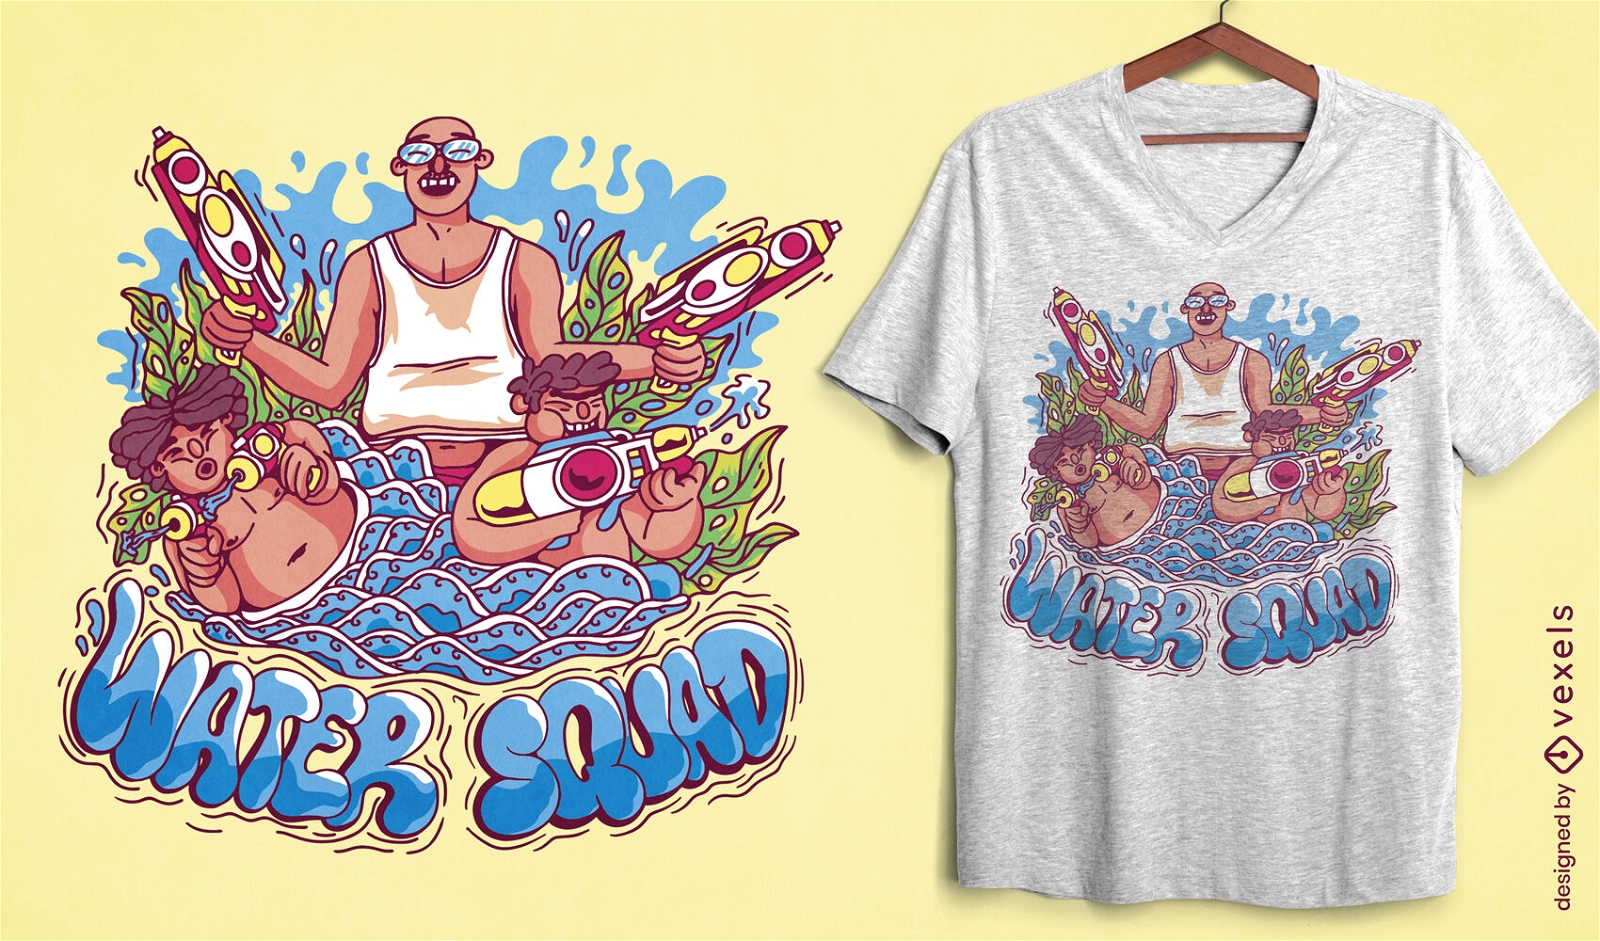 Dise?o de camiseta del festival del agua de Songkran.